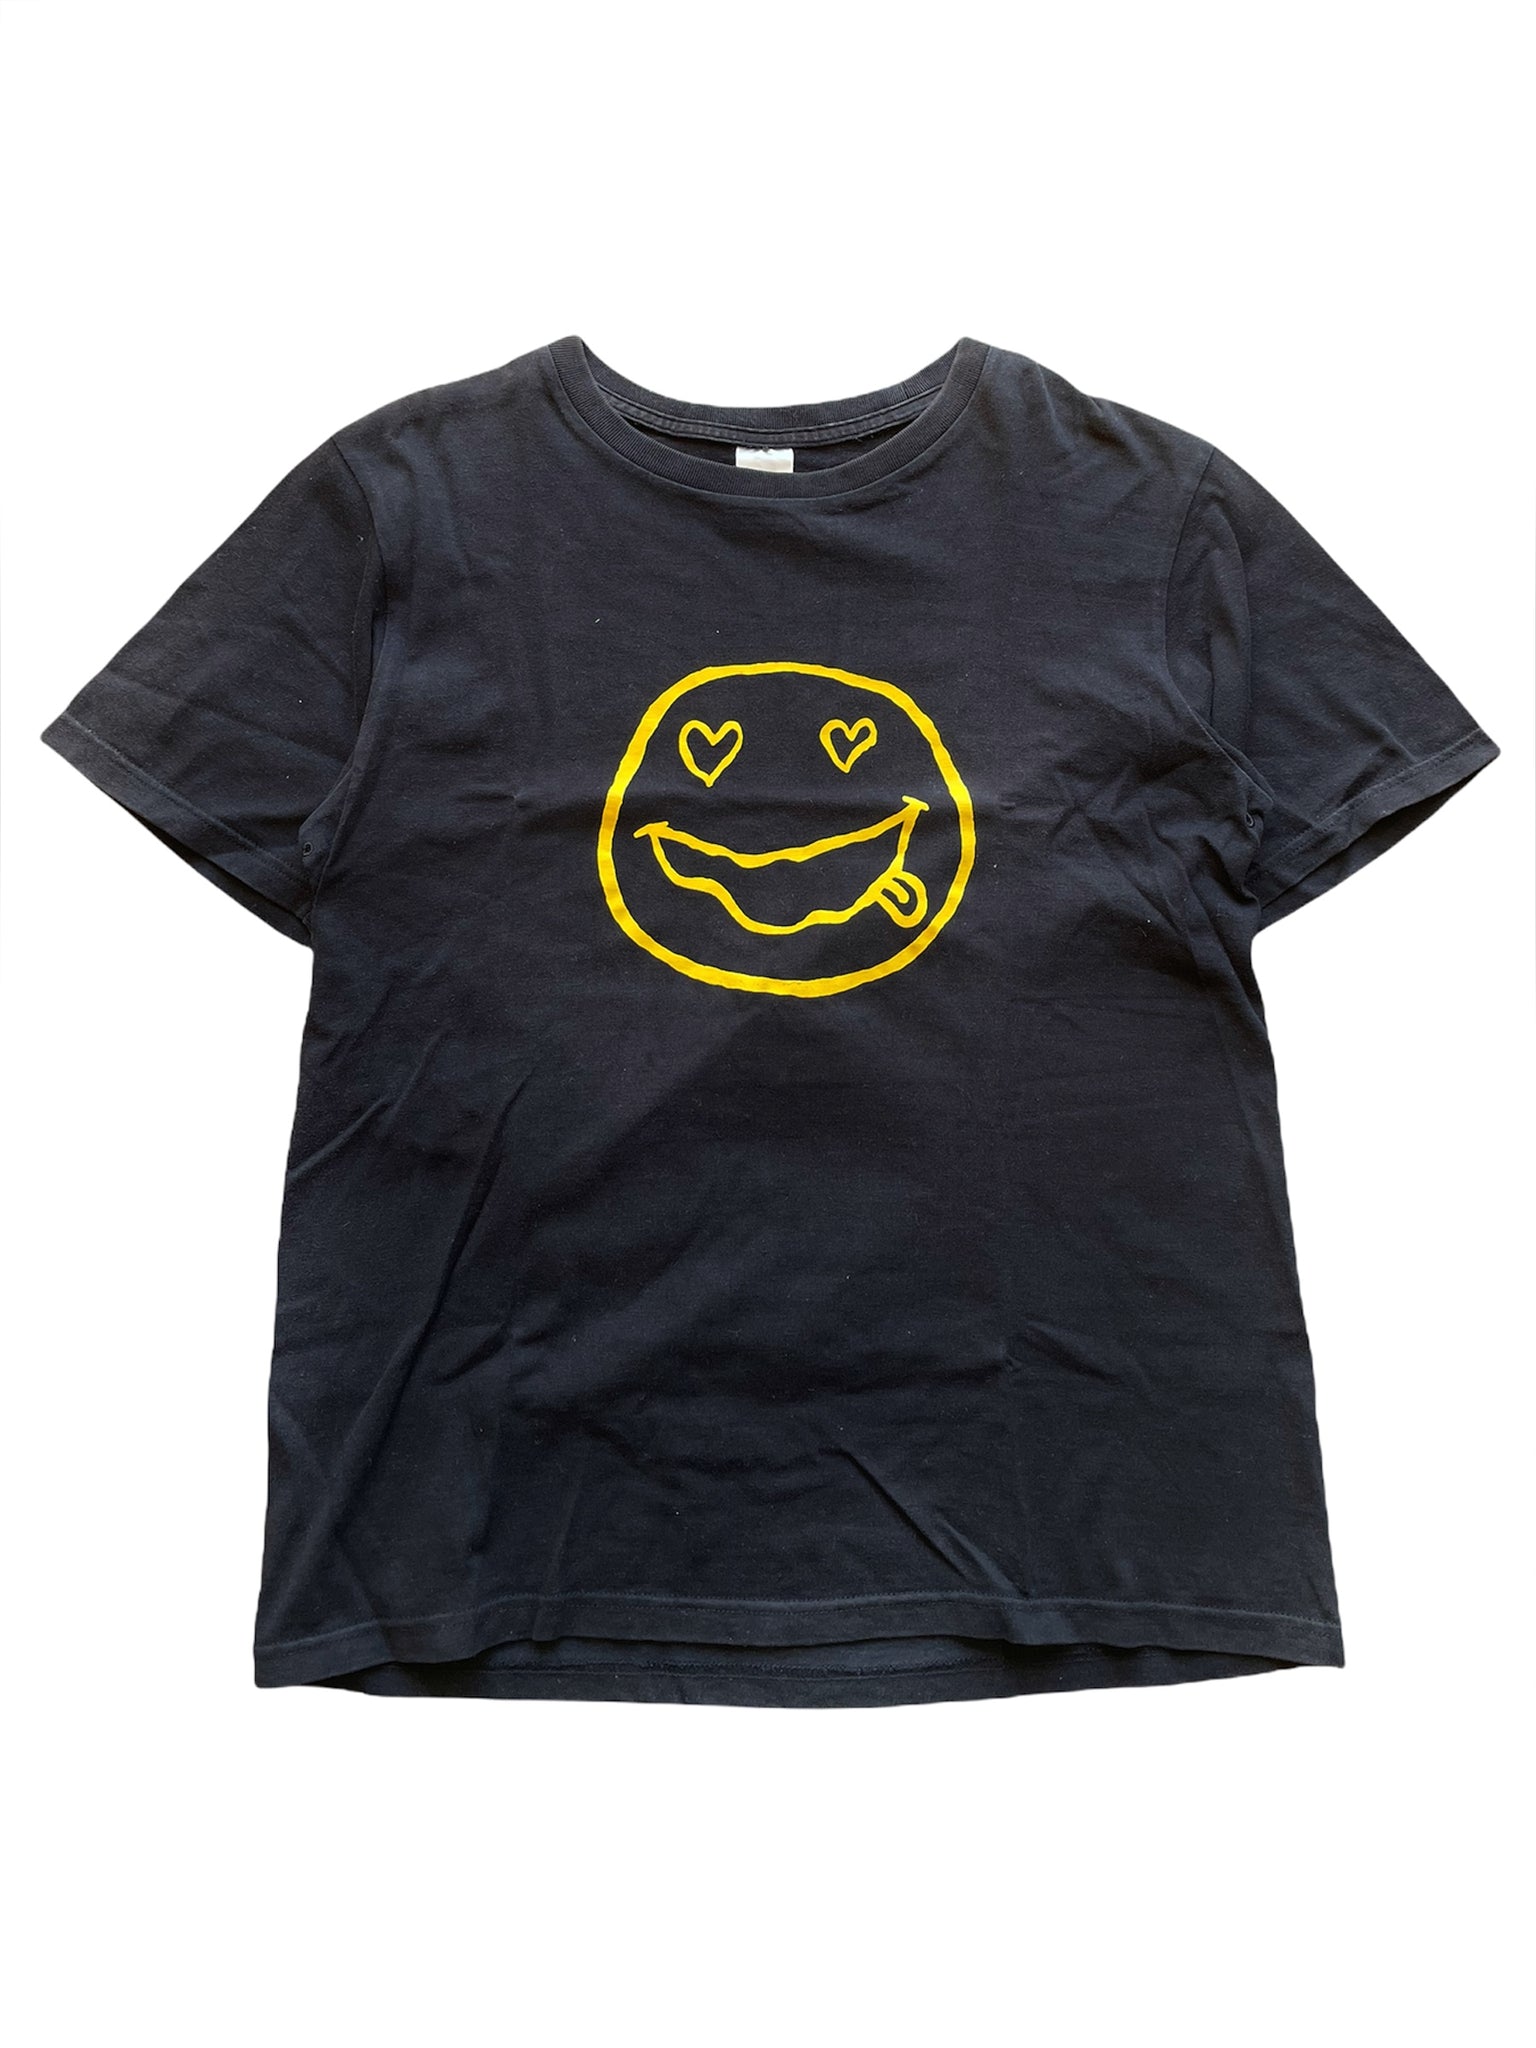 2002 Nirvana Smile Face